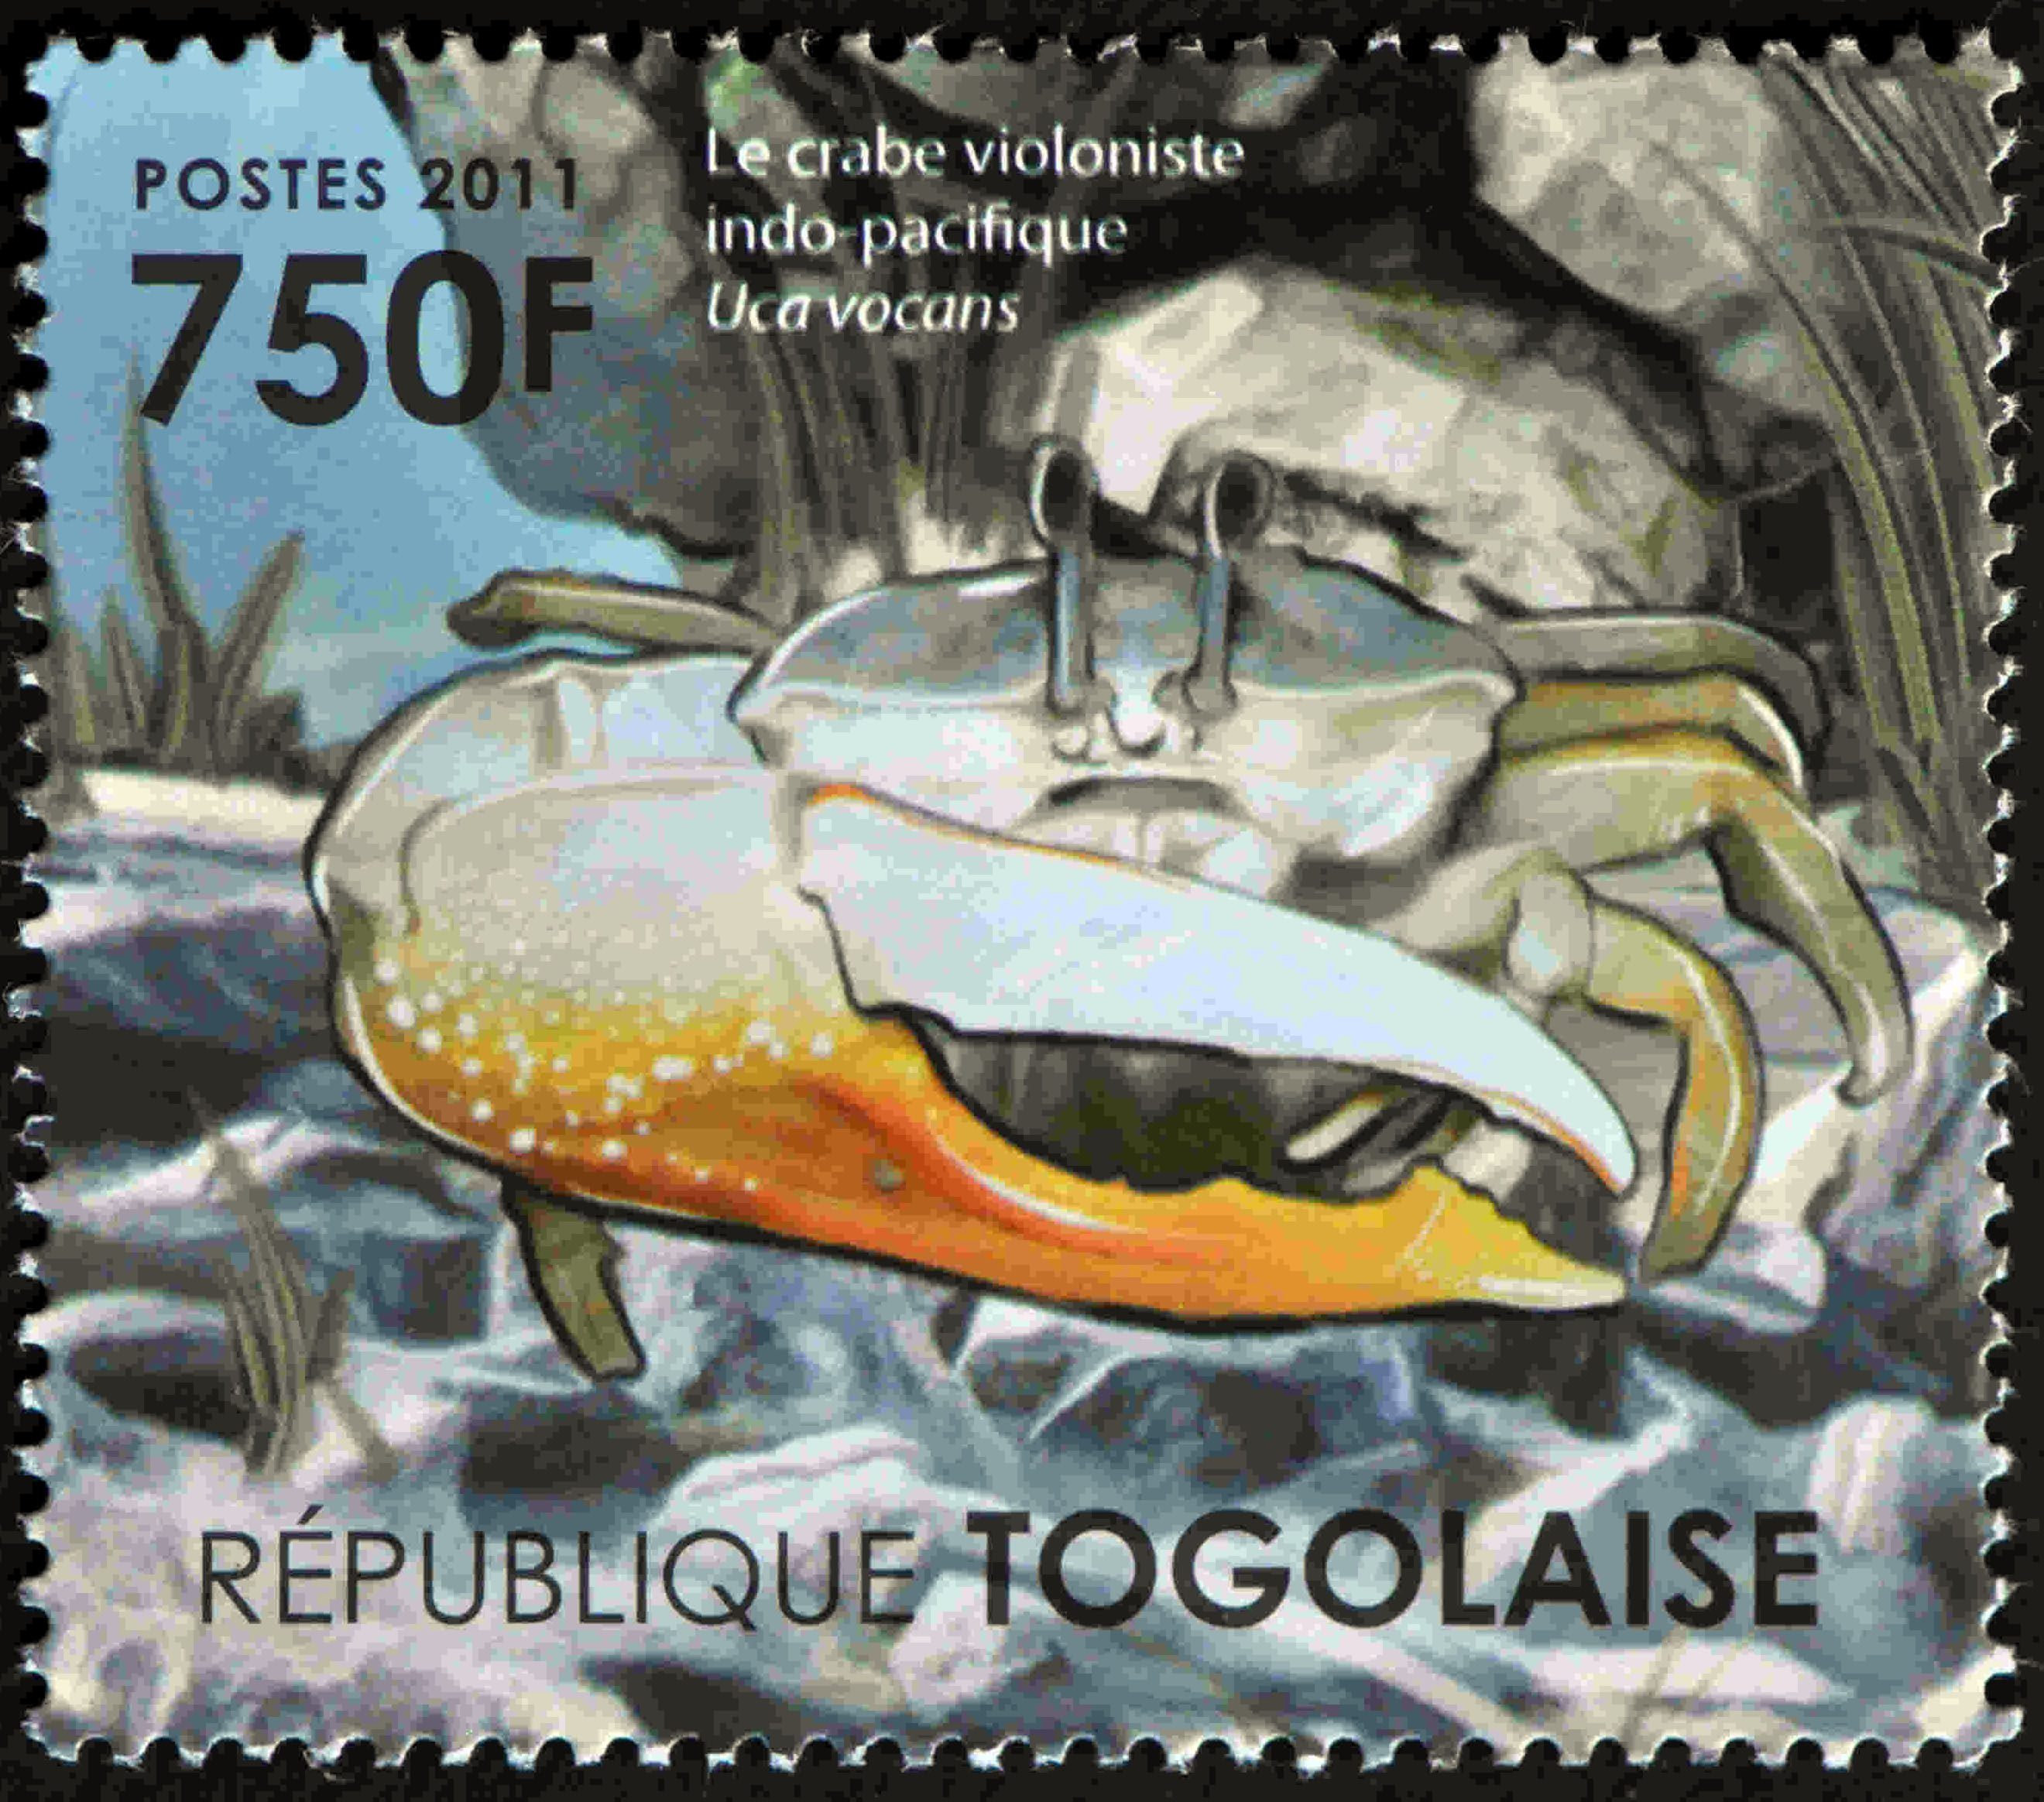 Postage Stamp: Togo (2011) image